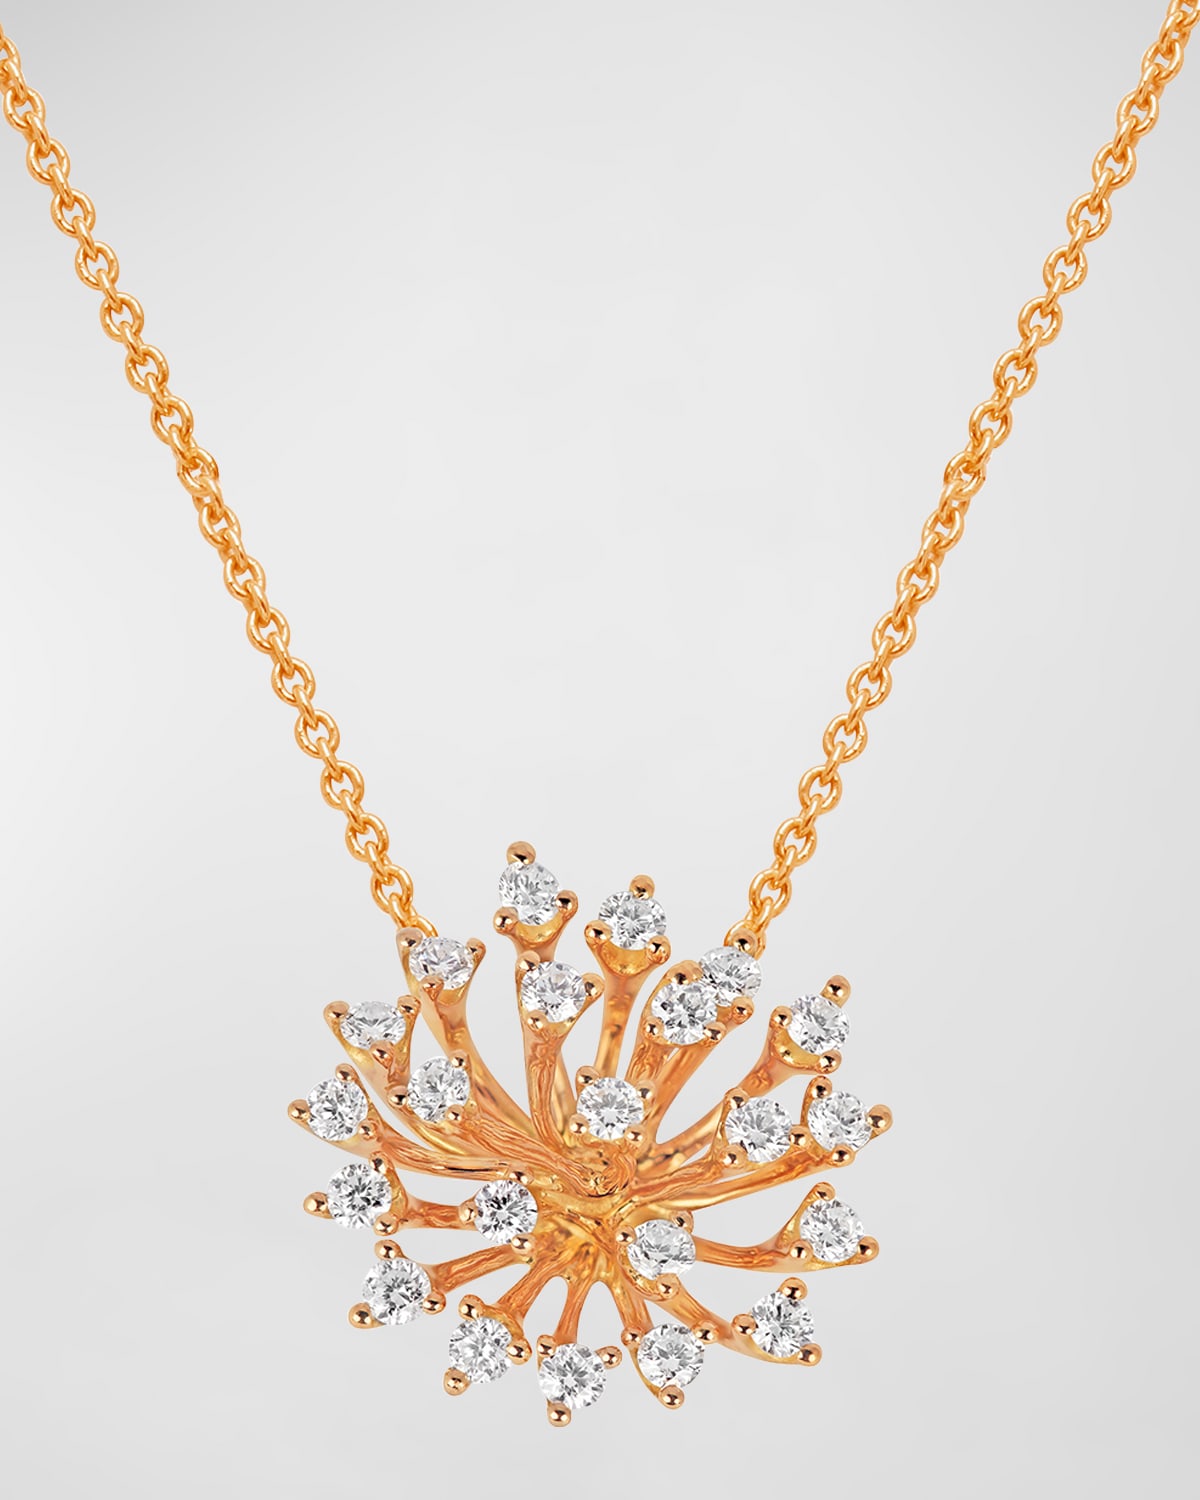 Hueb 18k Luminous Gold Diamond Pendant Necklace, 18" In Rose Gold